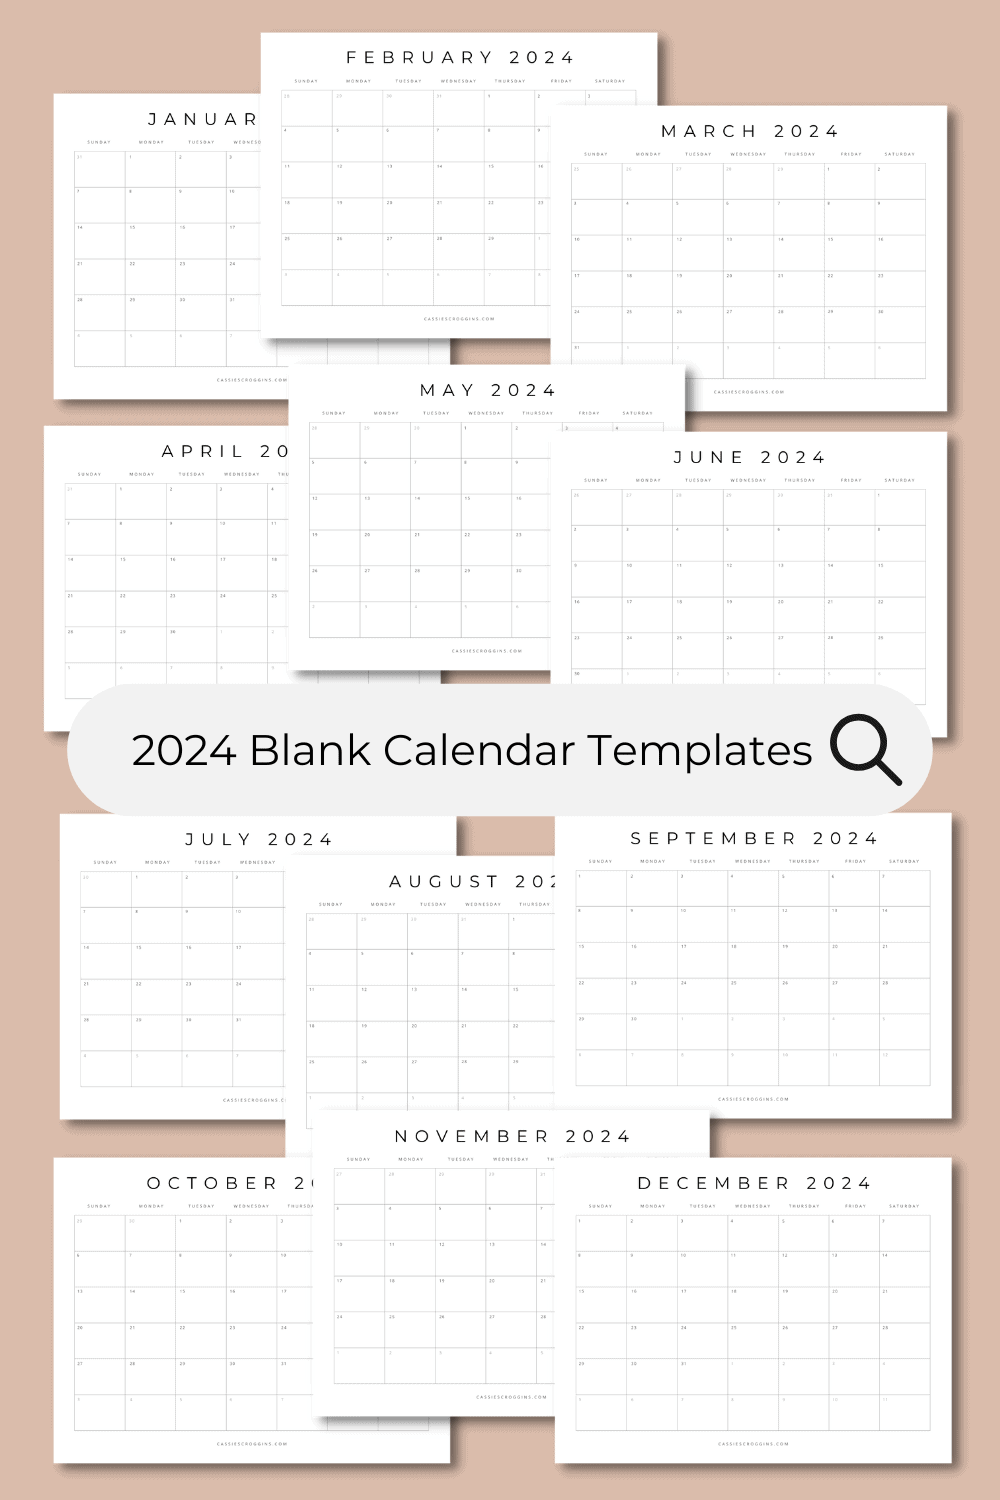 Free Printable 2024 Blank Calendar Templates (All 12 Months) within Free Printable Blank Year Calendar Template 2024